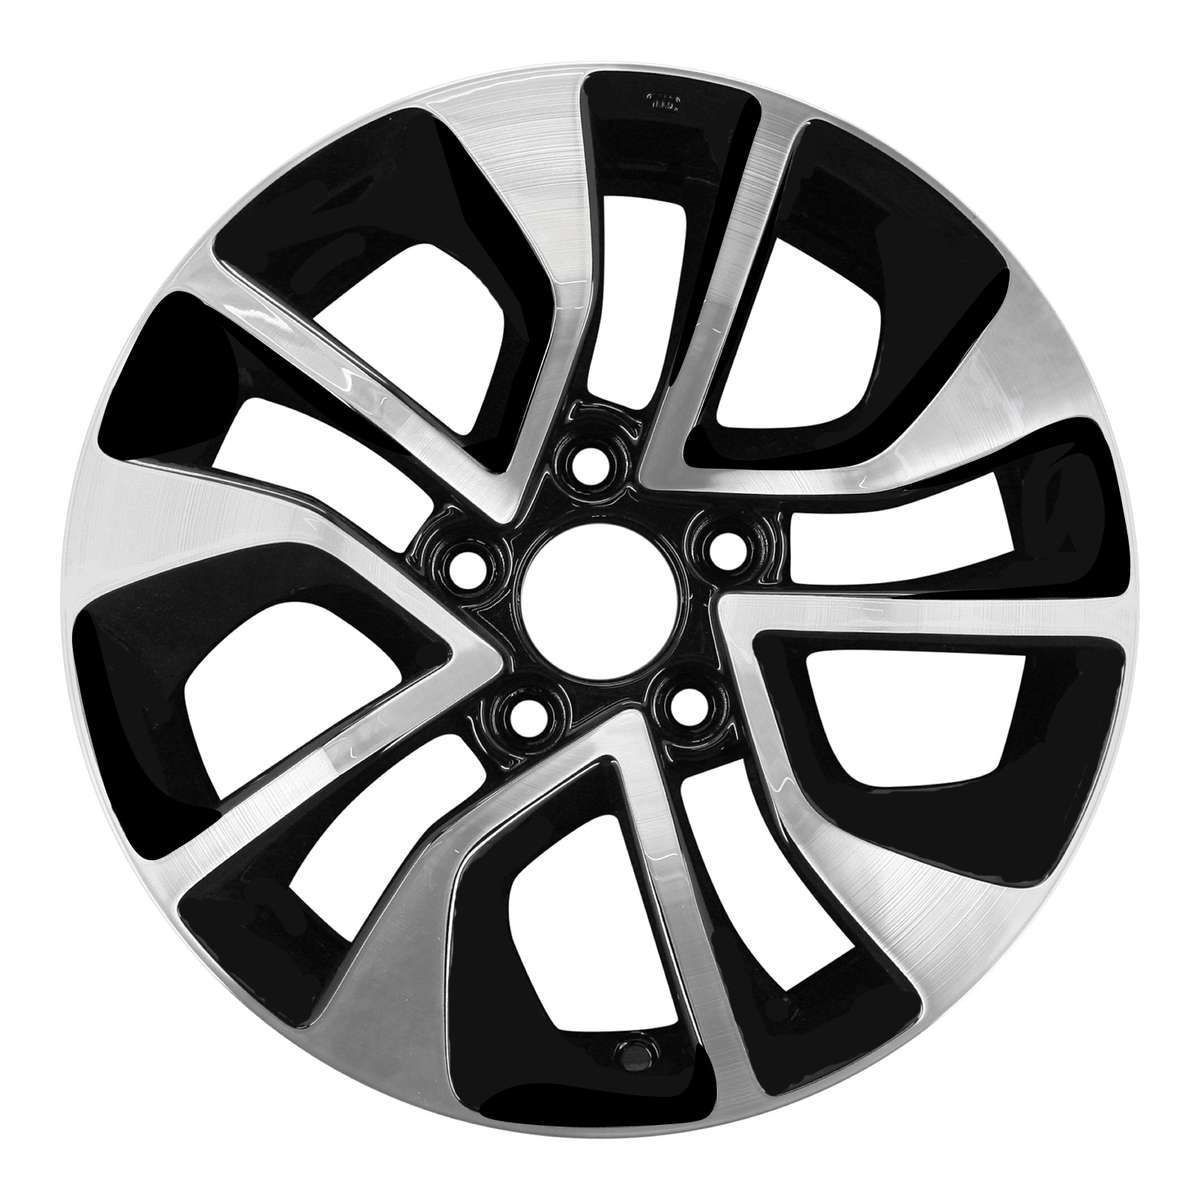 2015 Honda Civic New 16" Replacement Wheel Rim RW64054MB